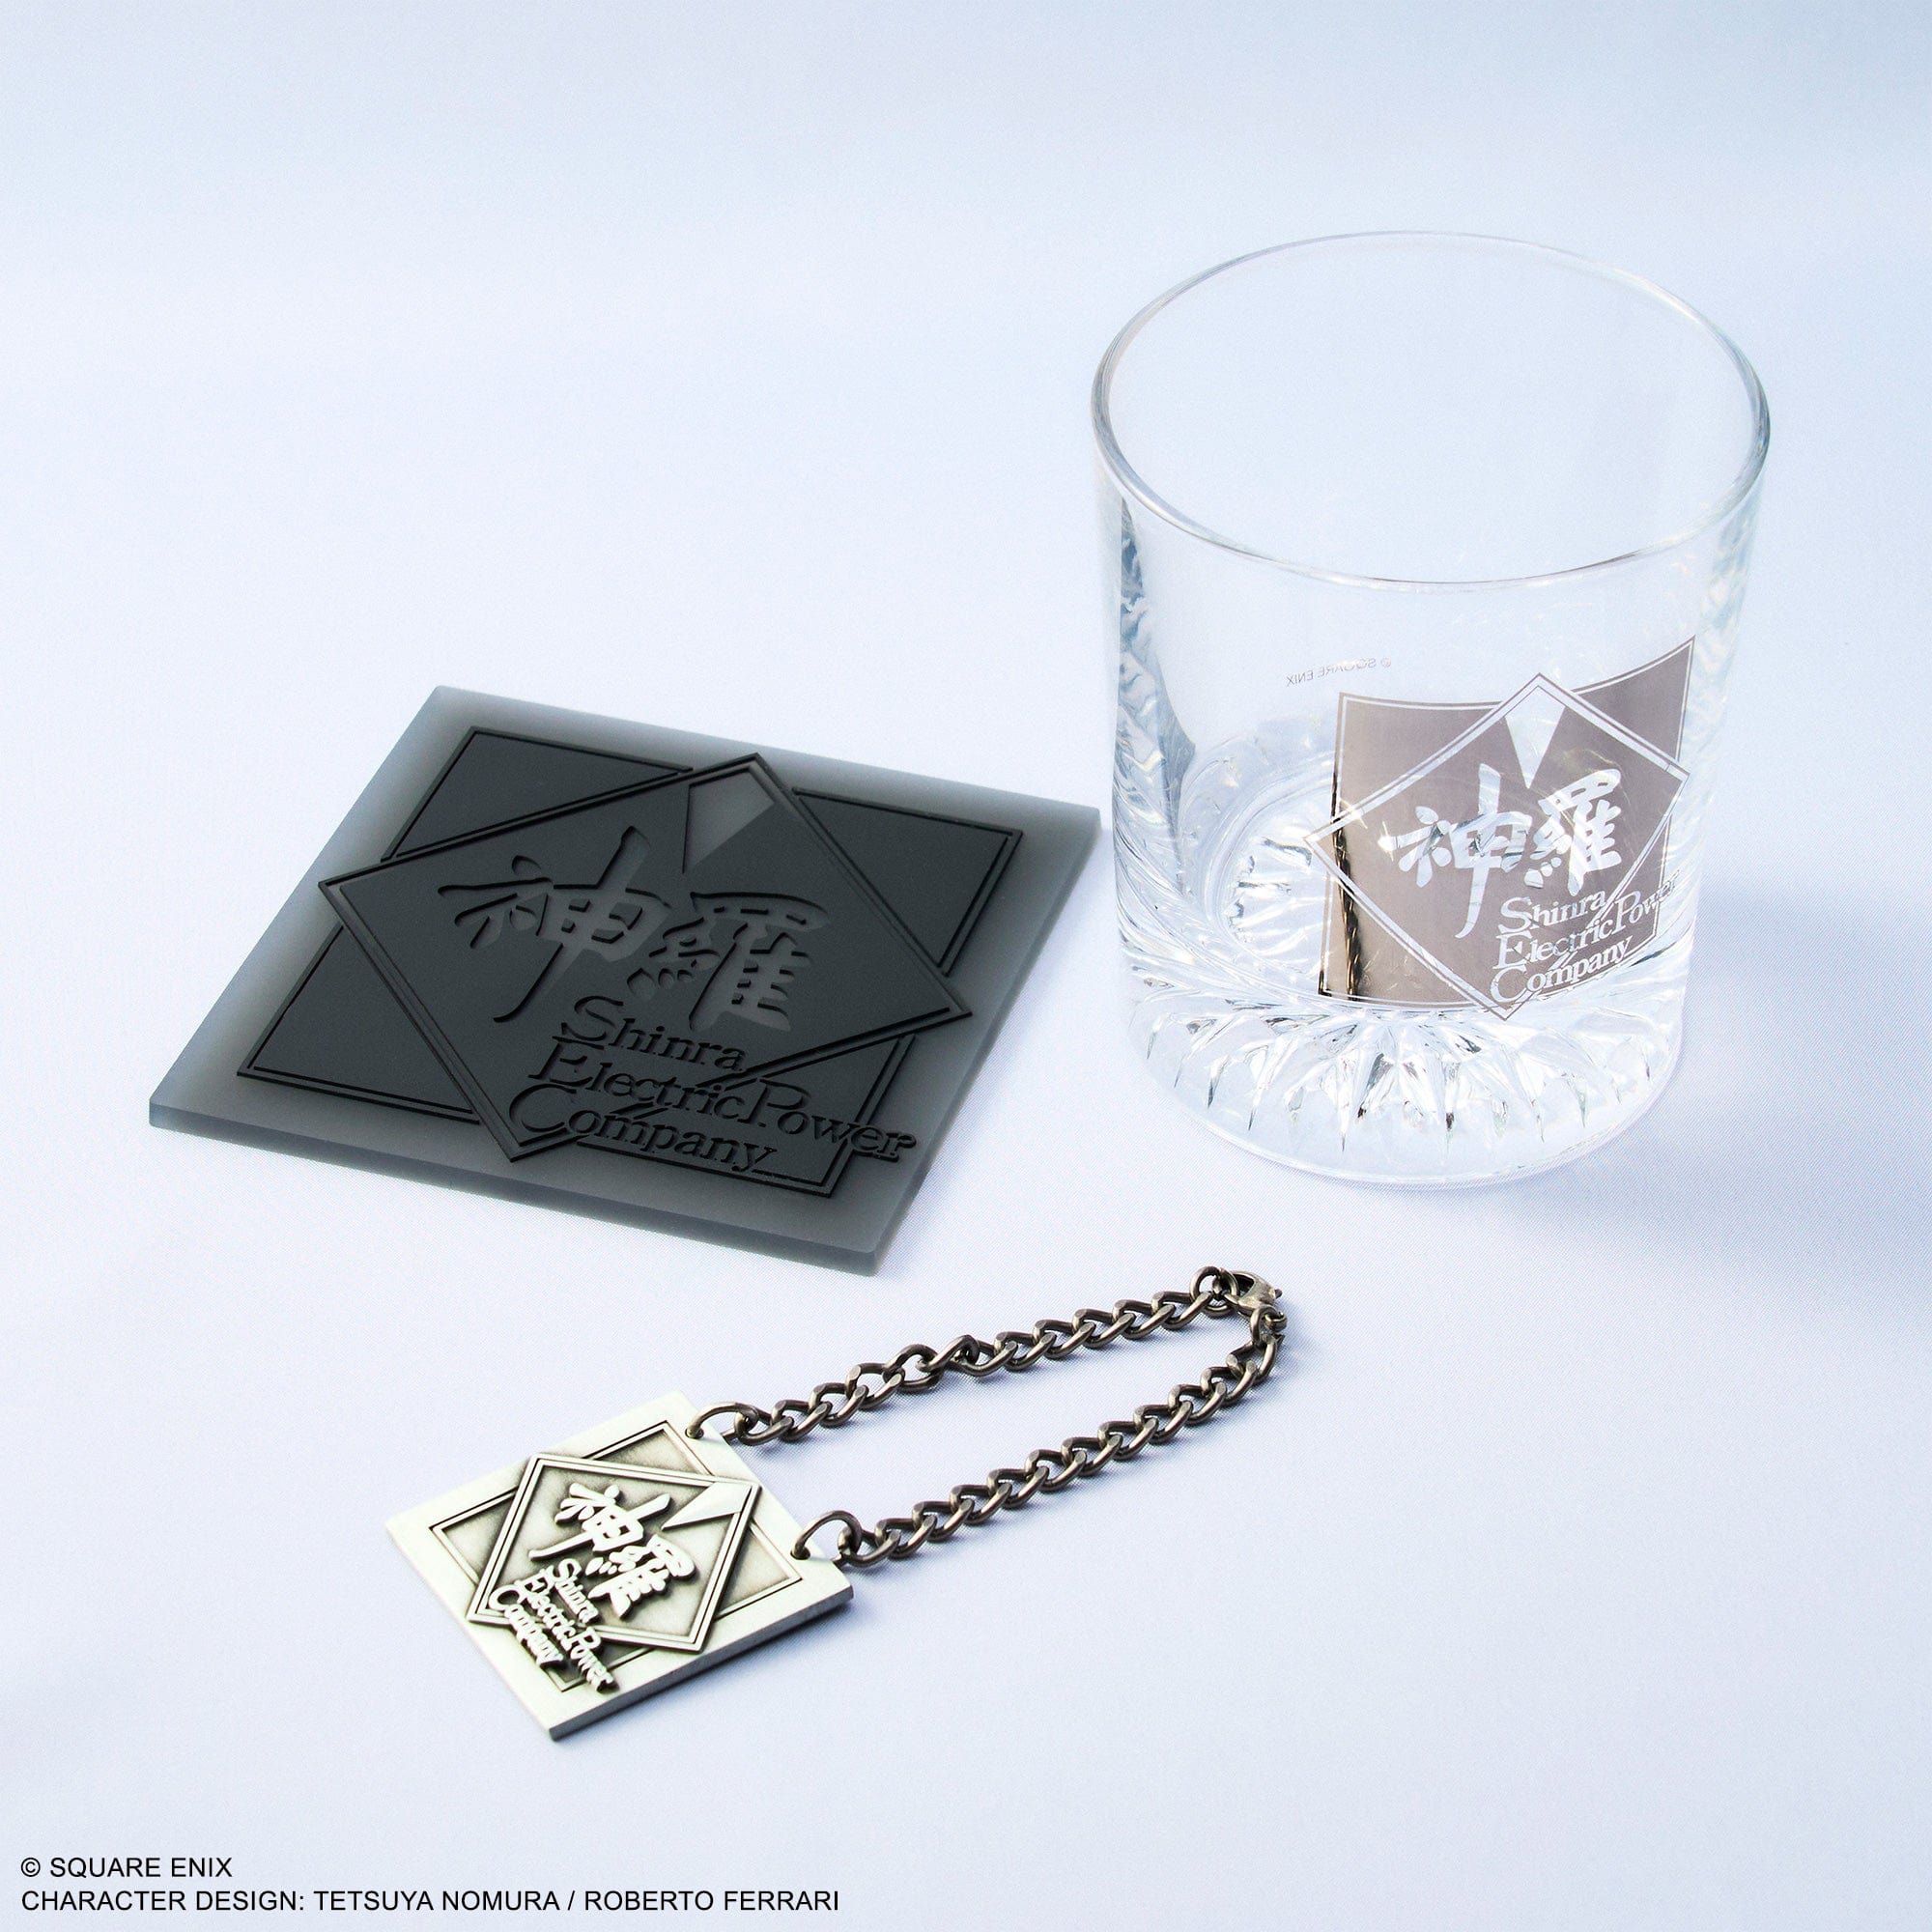 Square Enix FINAL FANTASY VII REBIRTH Glass & Coaster Set - SHINRA